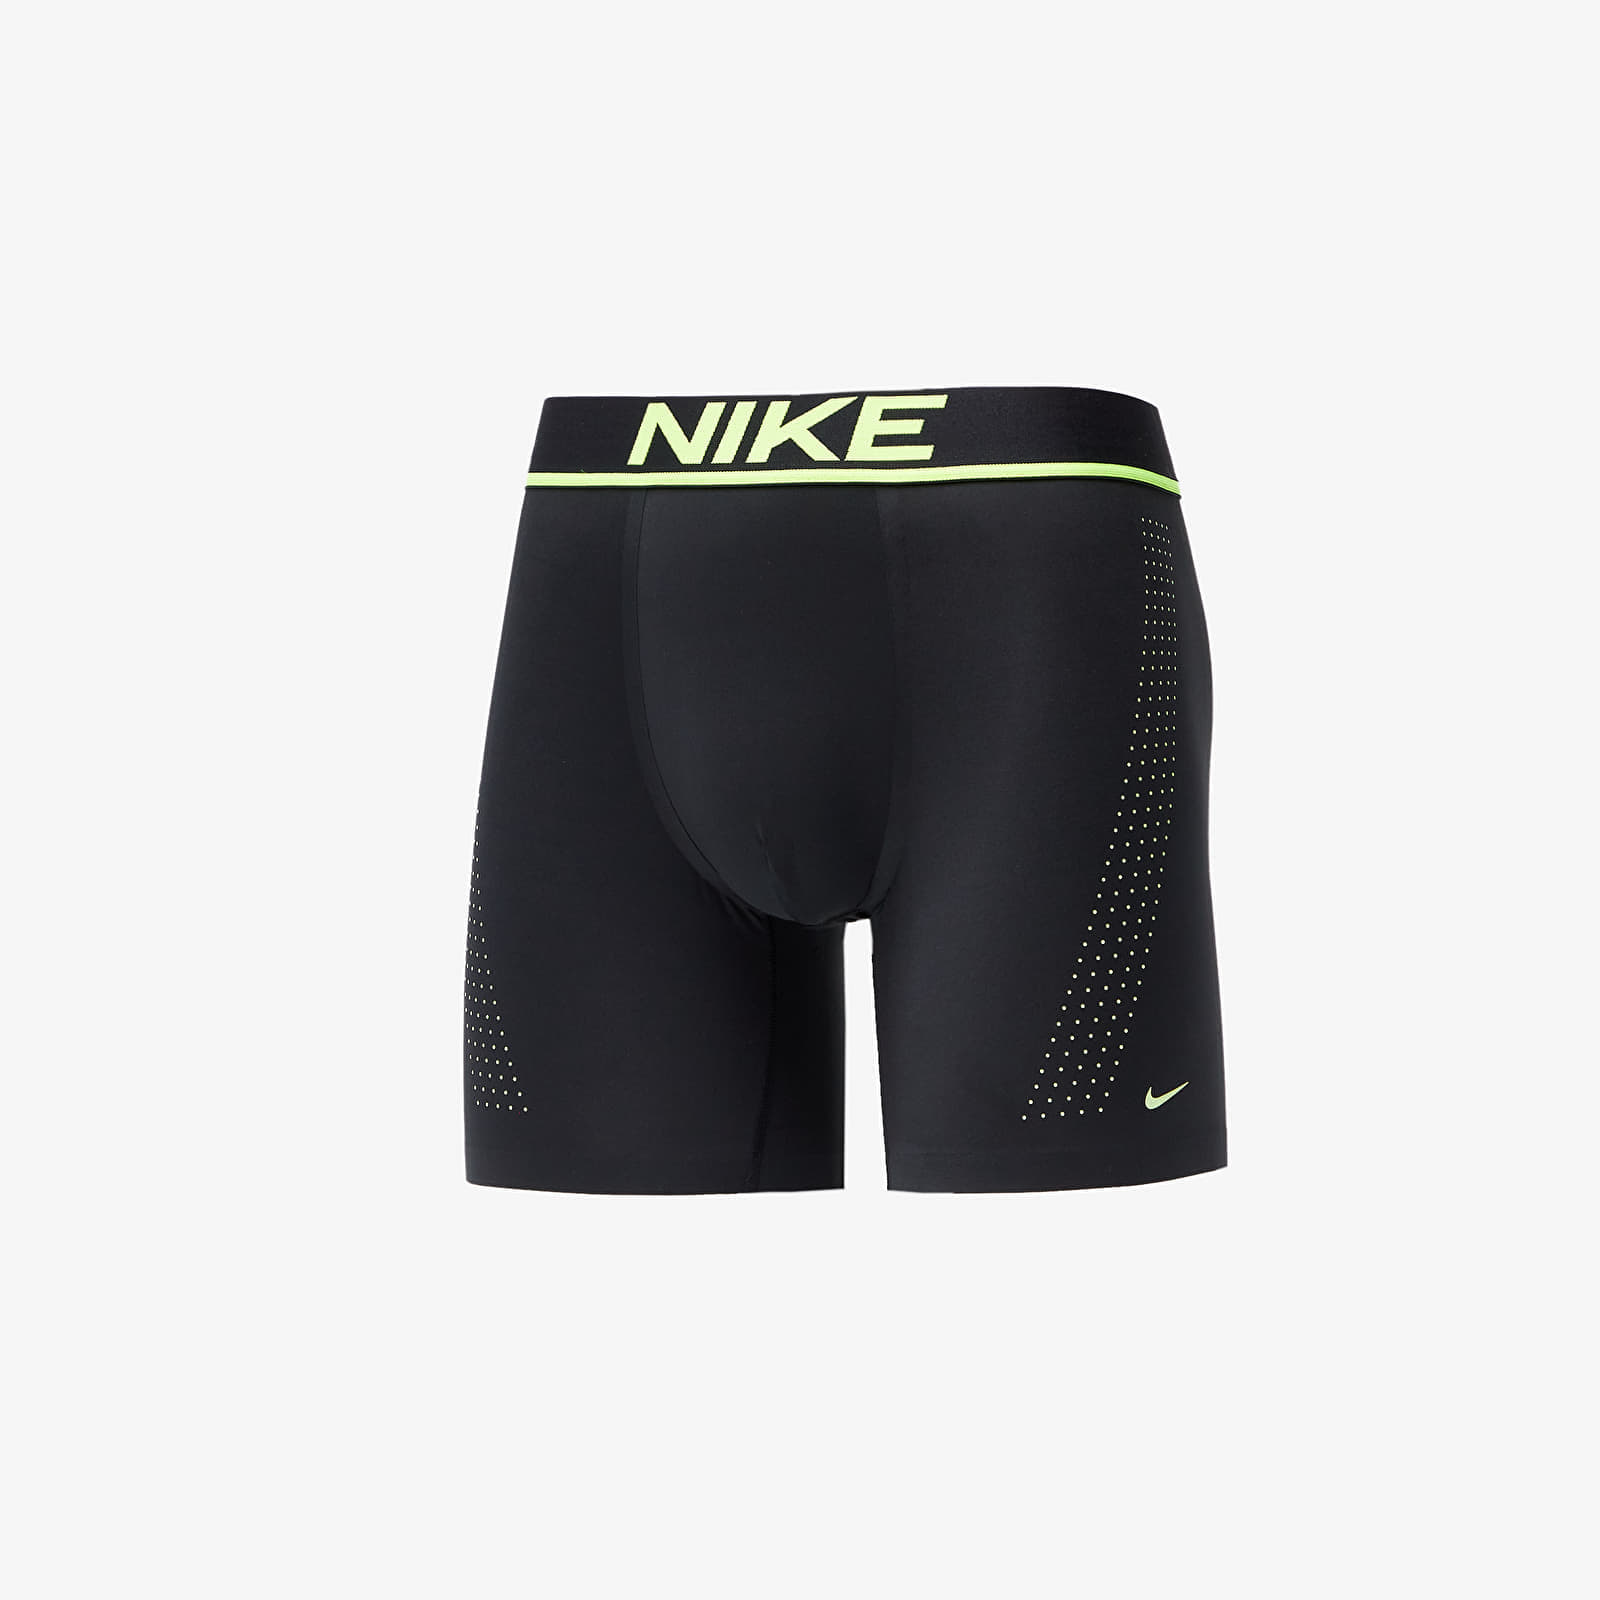 Boxer shorts Nike Boxer Brief Black